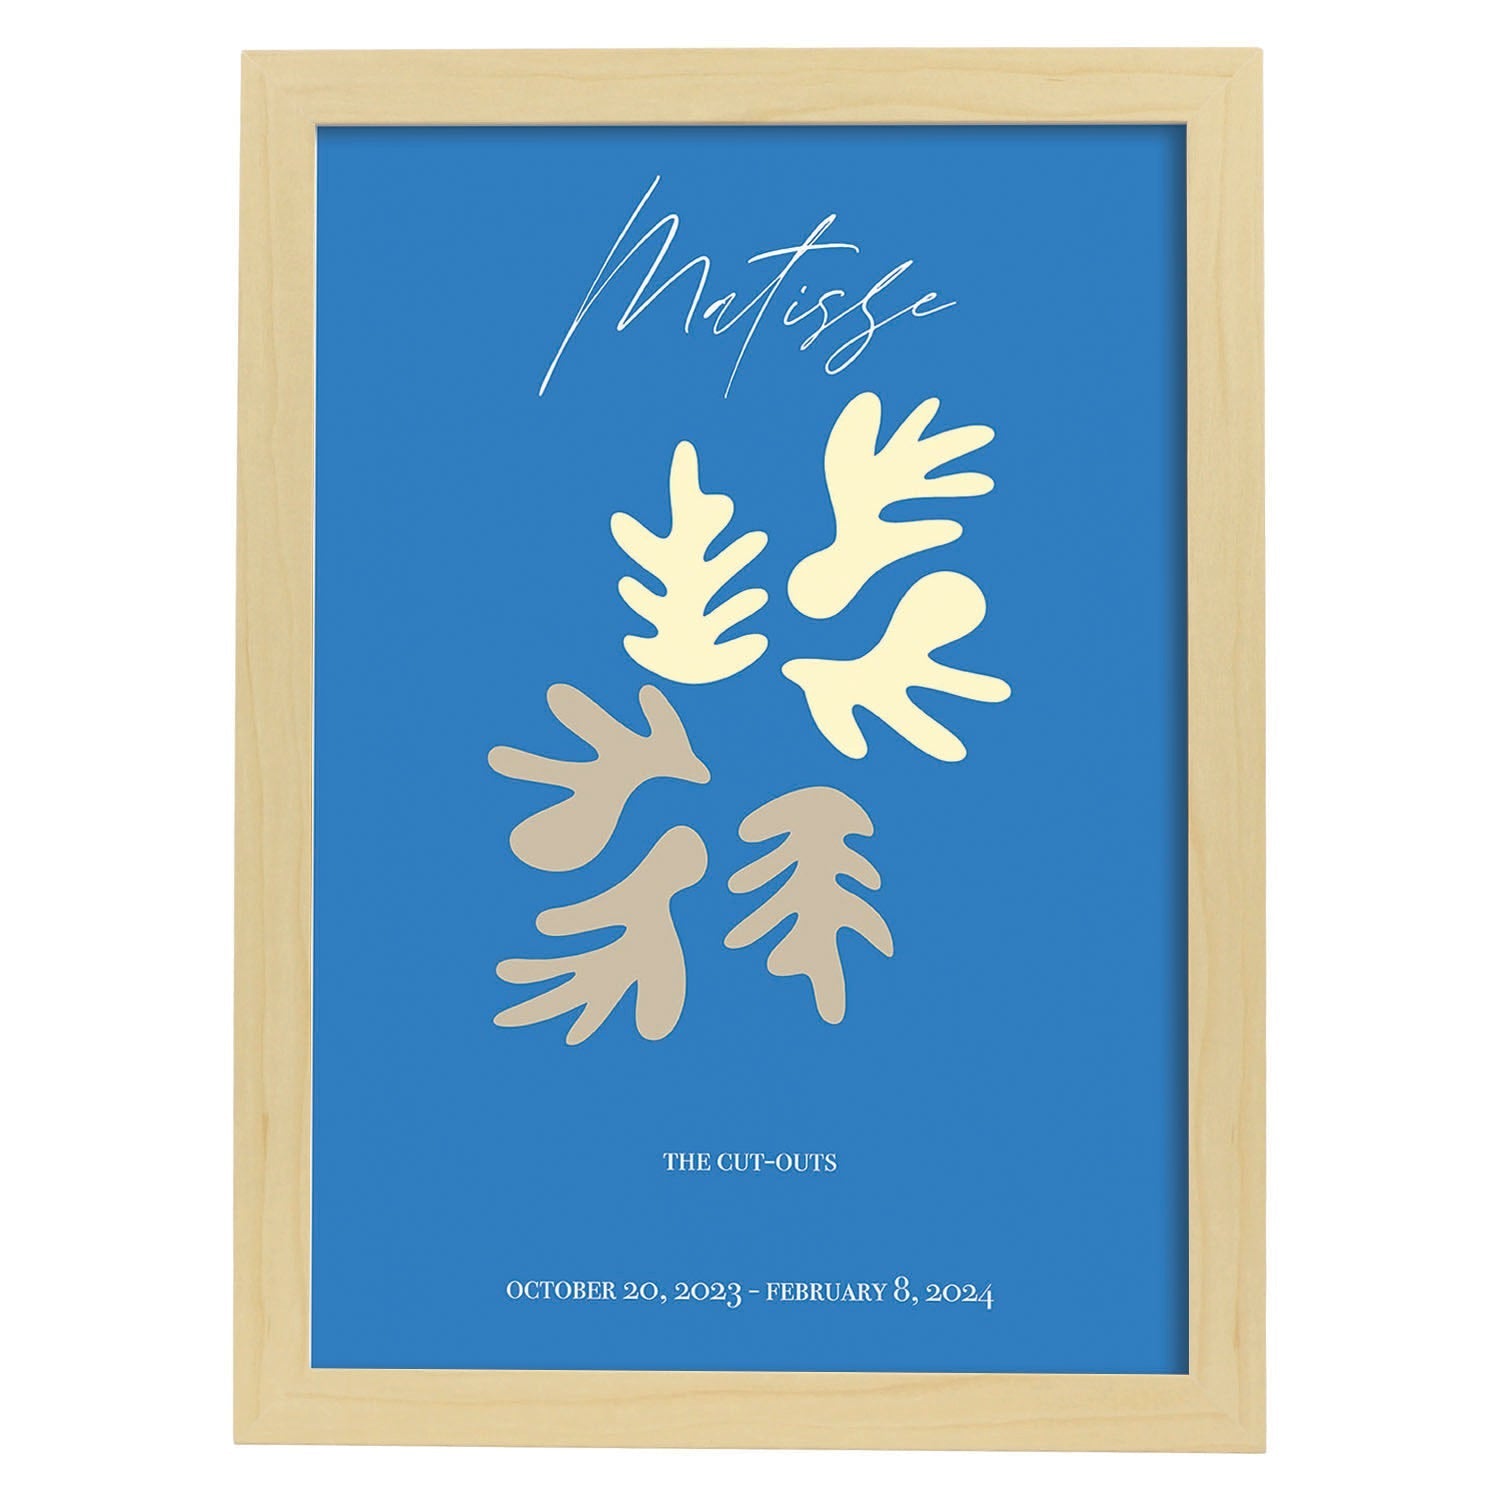 Lamina artistica decorativa con ilustración de Exposición Matisse 6 estilo fauvista-Artwork-Nacnic-A4-Marco Madera clara-Nacnic Estudio SL